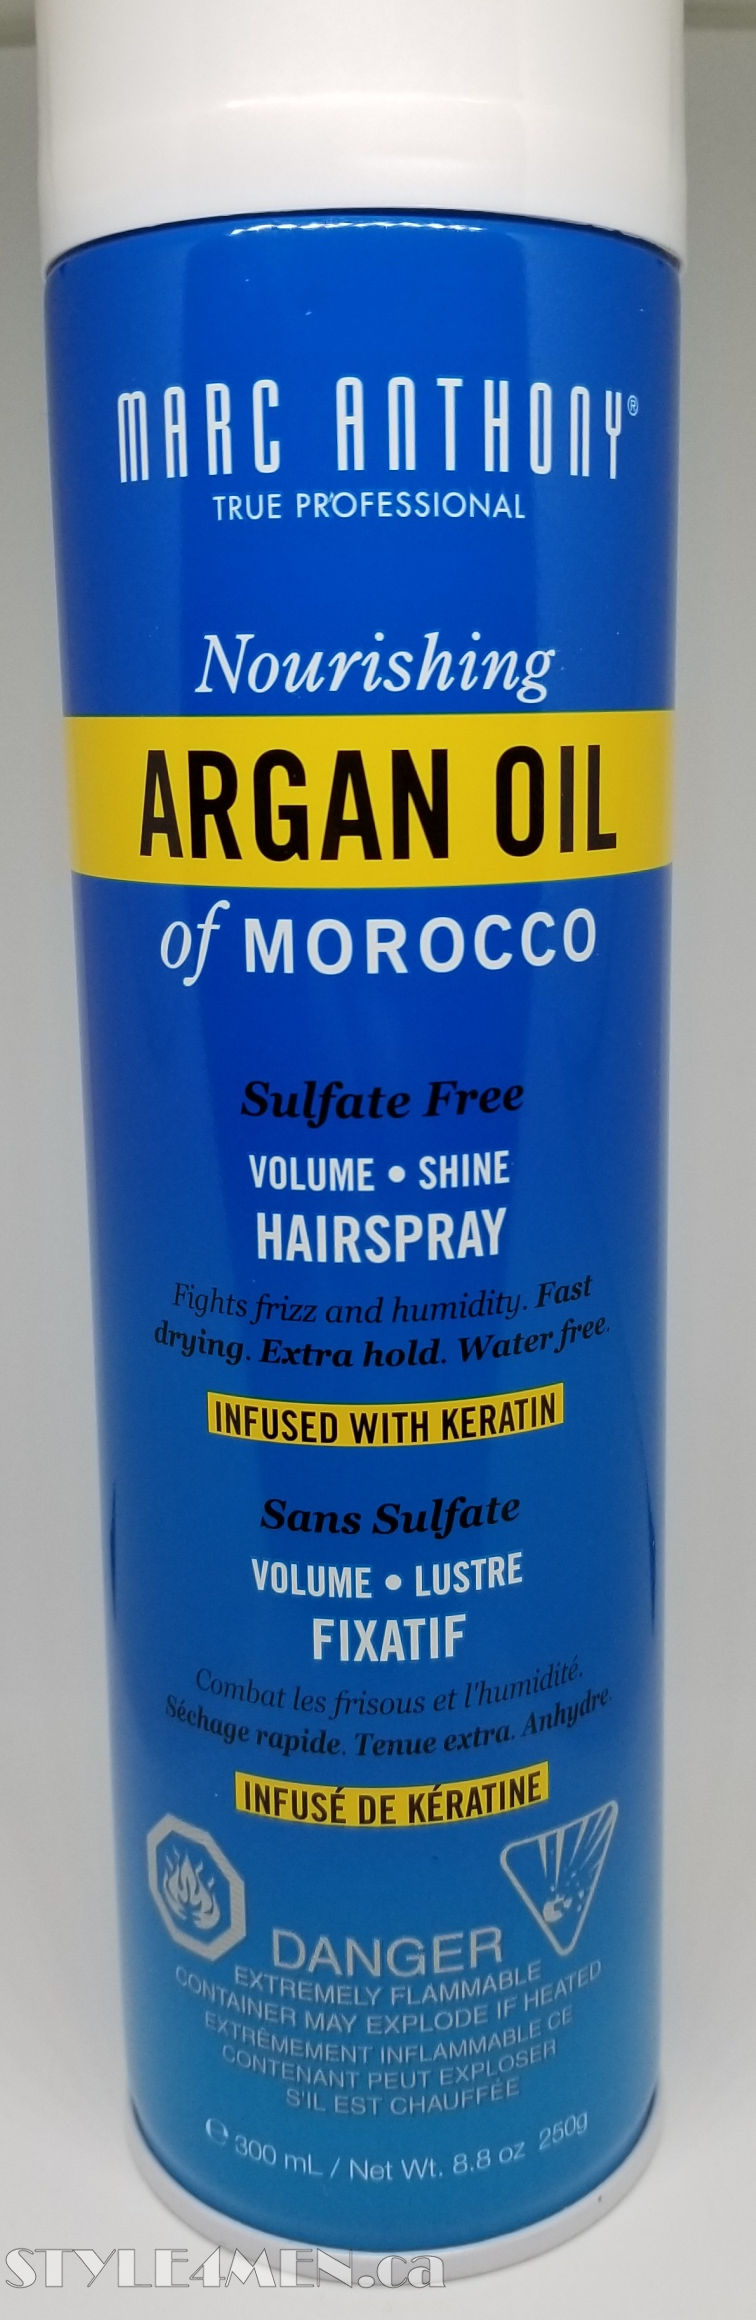 Marc Anthony Argan Oil Hairspray